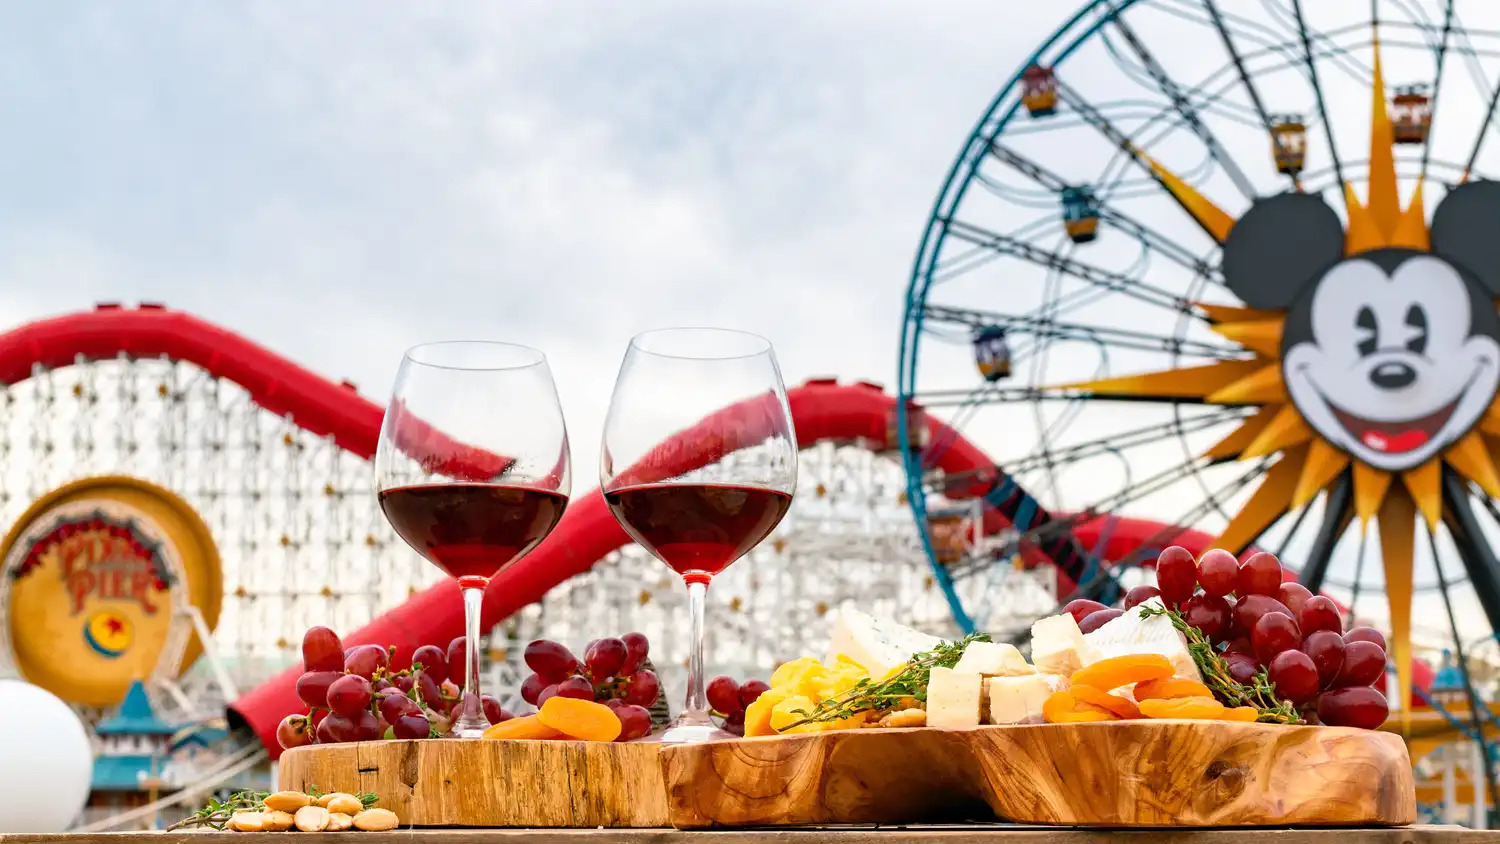 Disney California Adventure Food & Wine Festival at Disney California Adventure Park